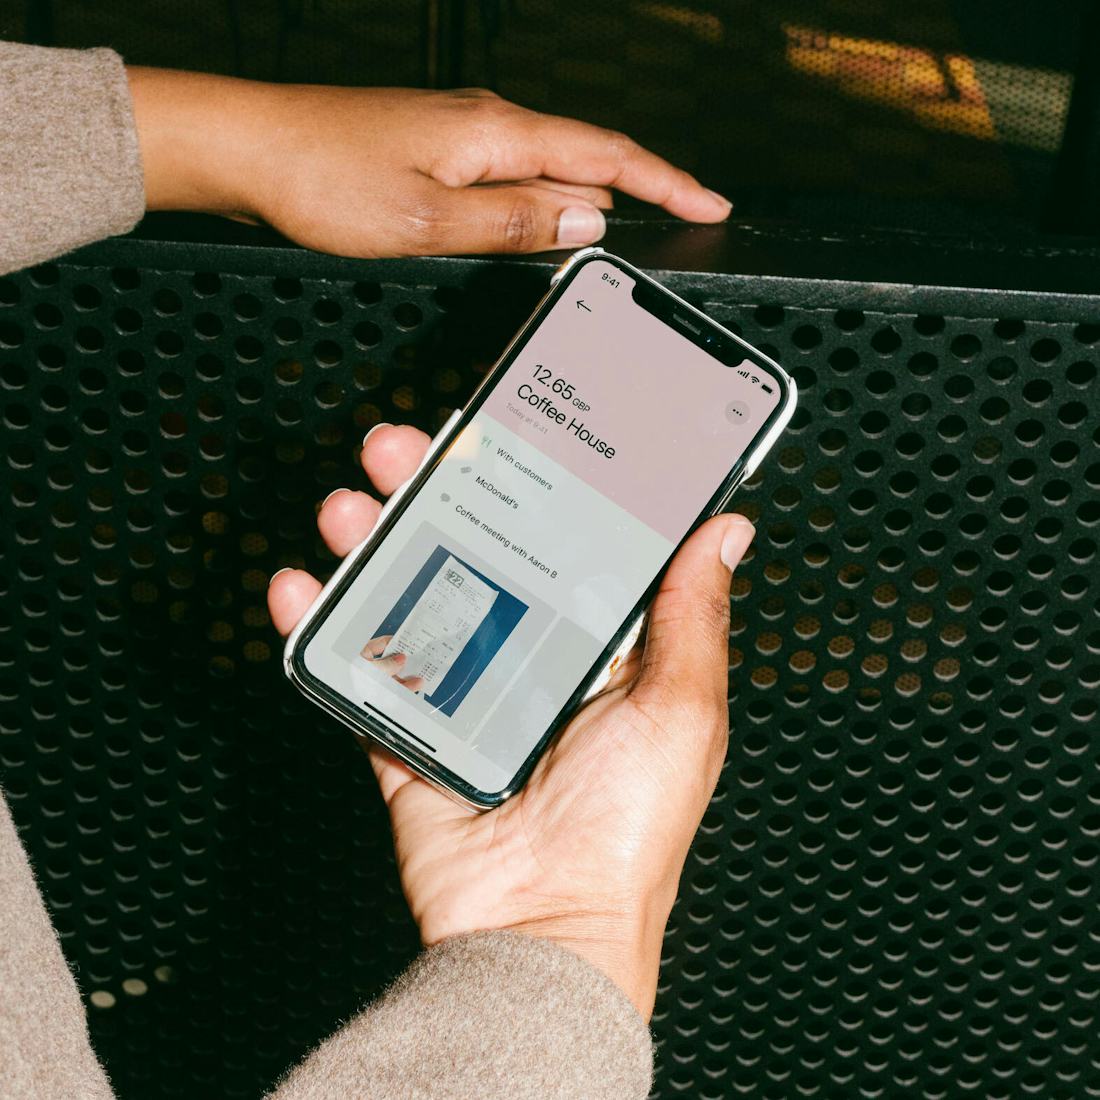 Employee holds a mobile phone with Pleo petty cash reimbursement app